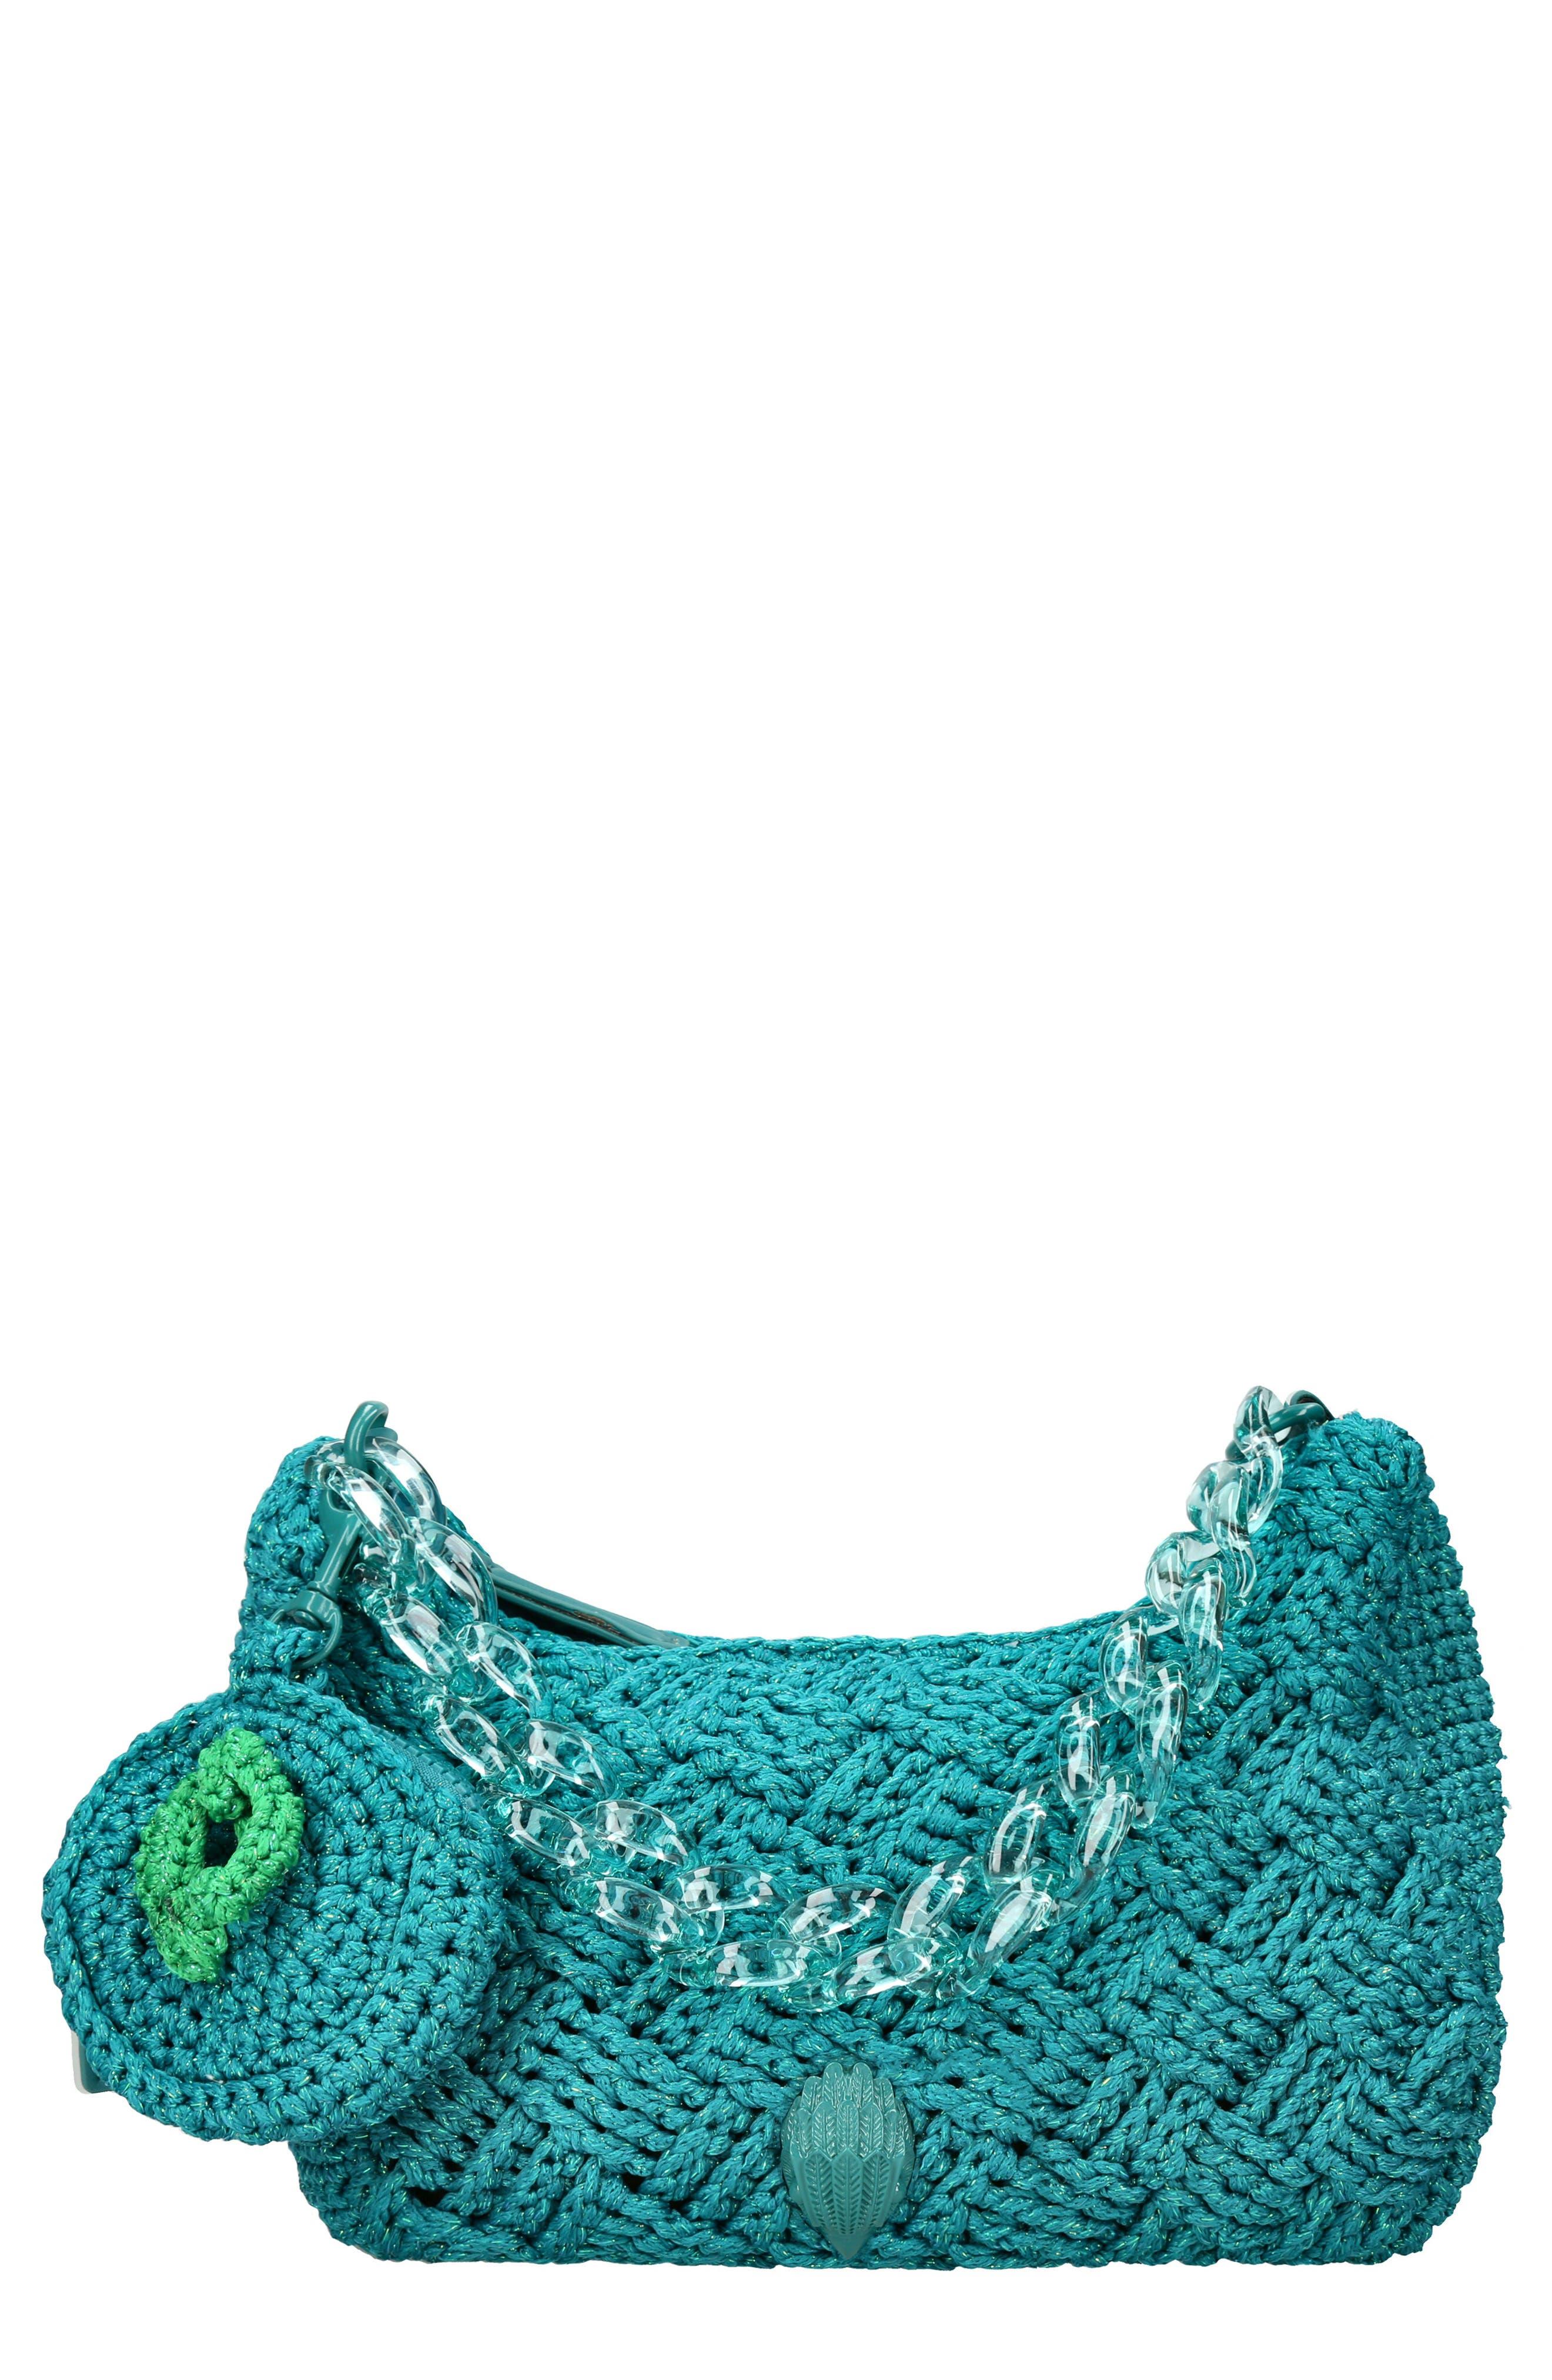 Kurt Geiger Crochet Multi Crossbody Bag in Green | Lyst